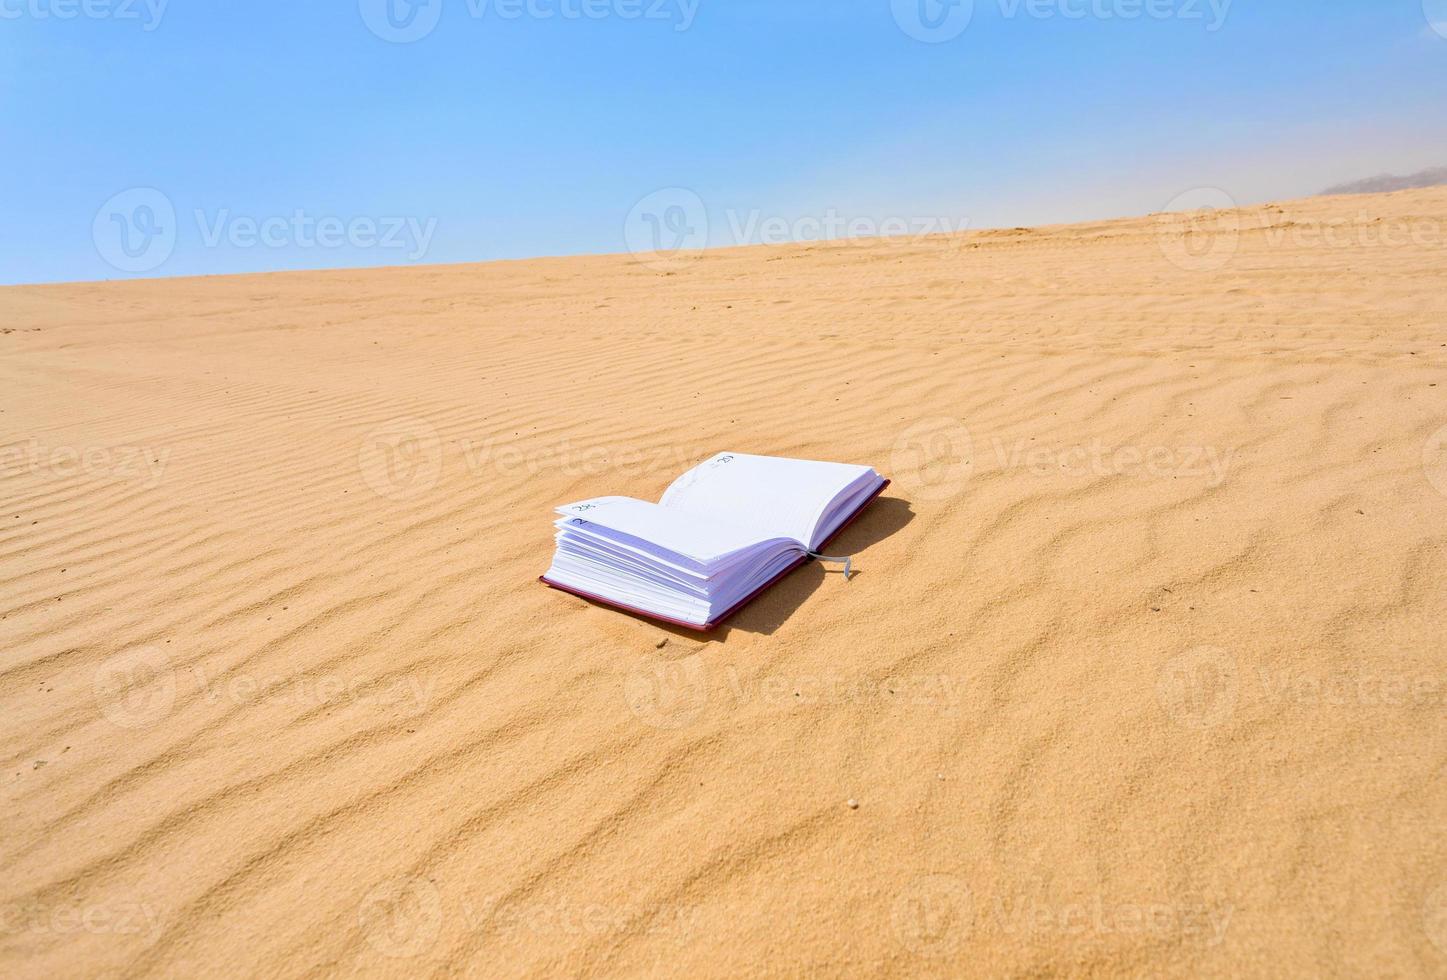 note book in sand dune desert photo